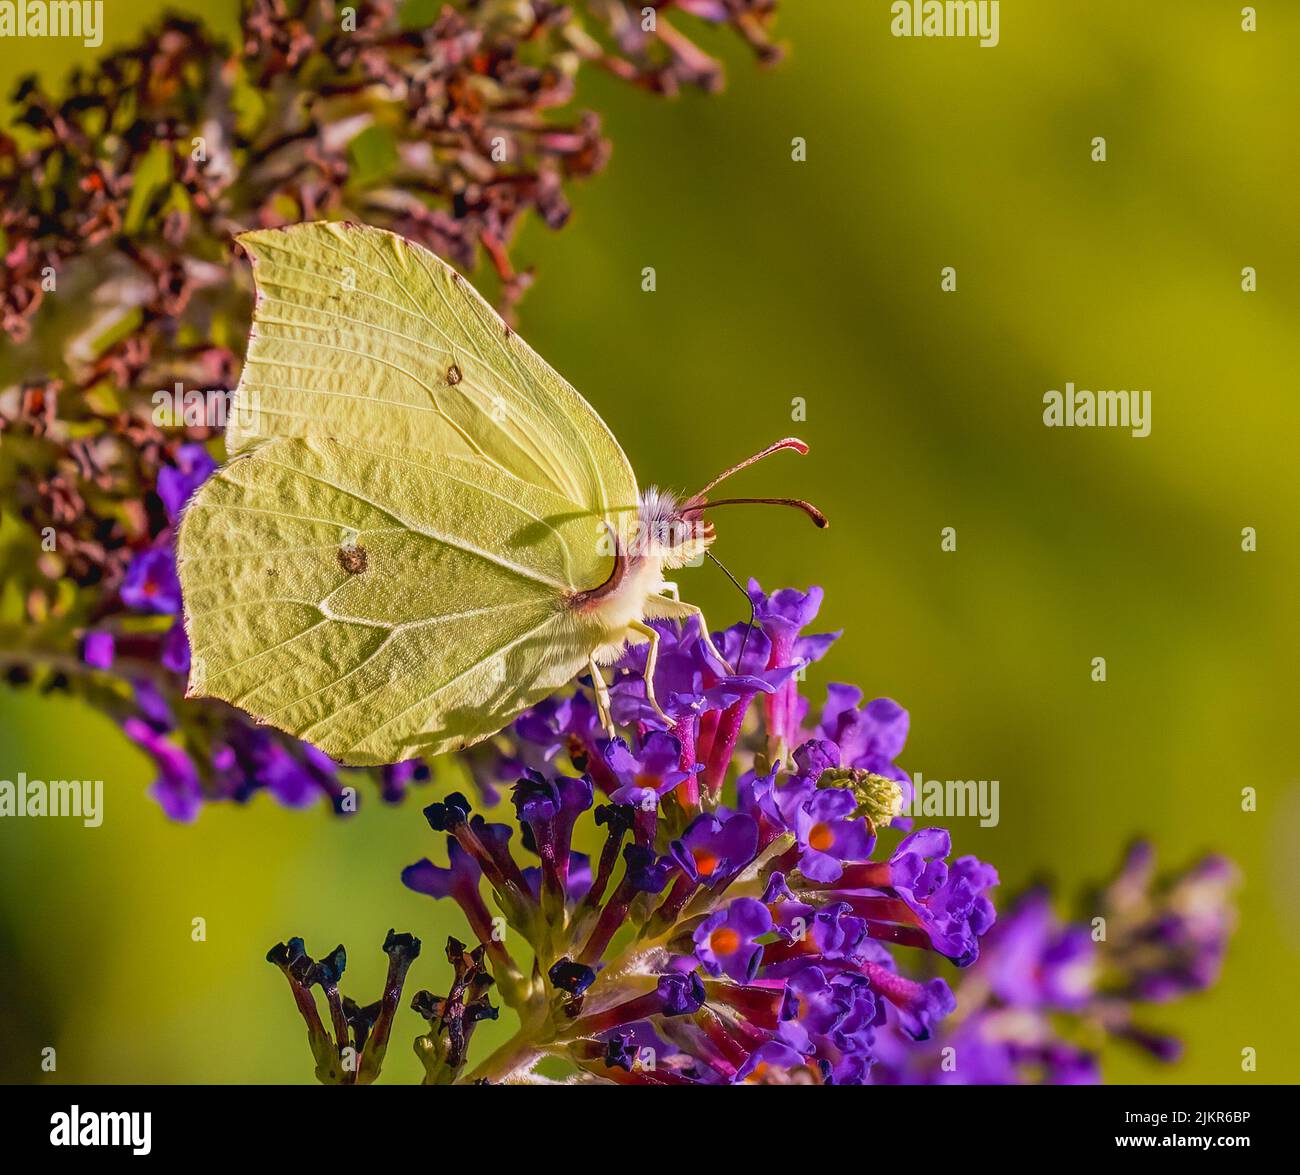 Brimstone Butterfly Feeding on Buddleia Stock Photo